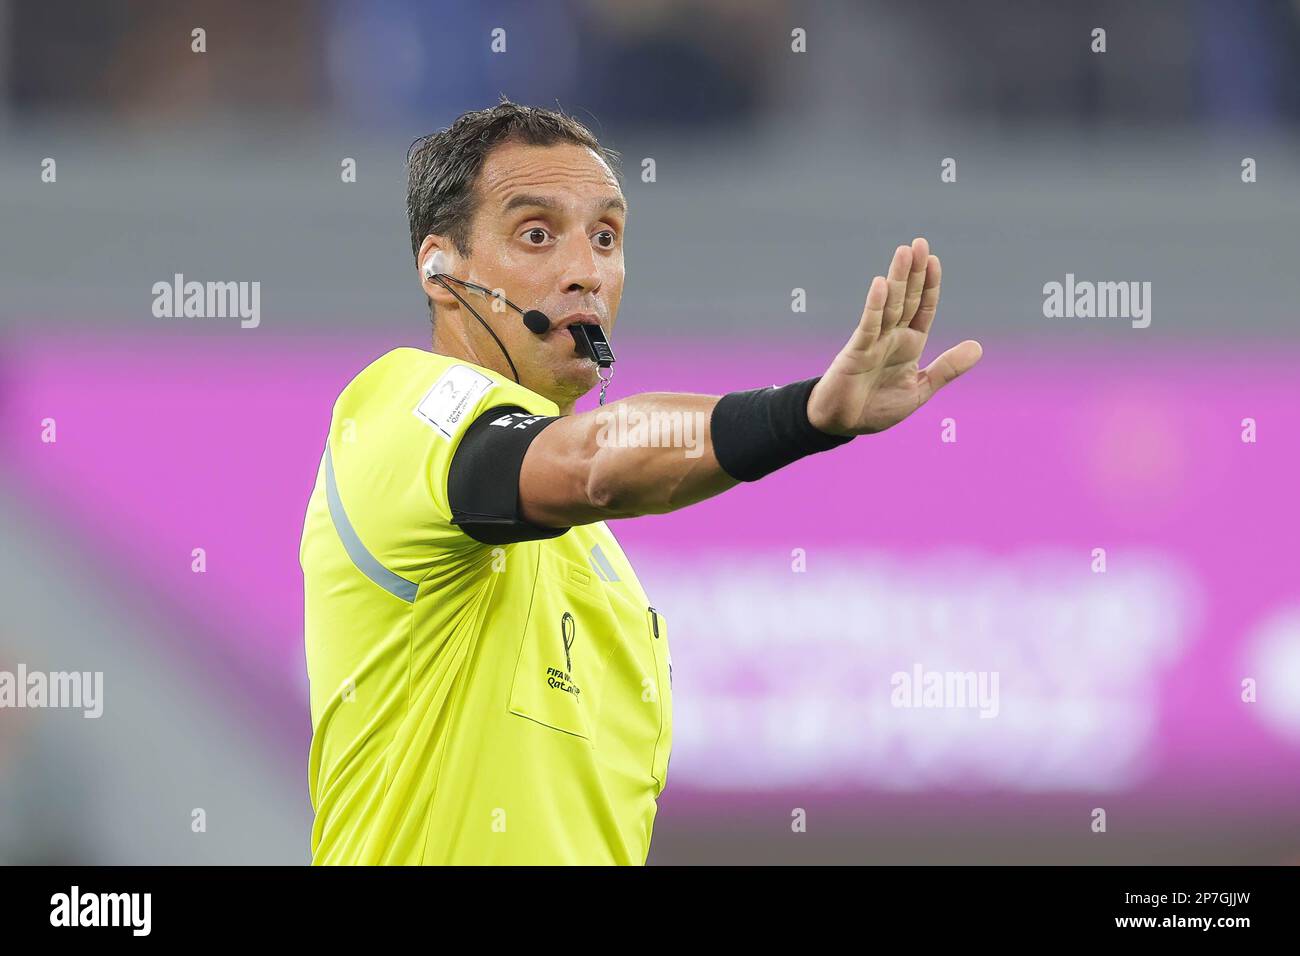 Referee Fernando Rapallini makes a gesture during the FIFA World Cup Qatar 2022 match between Serbia and Switzerland at Stadium 974. Final score; Serbia 2:3 Switzerland. Stock Photo